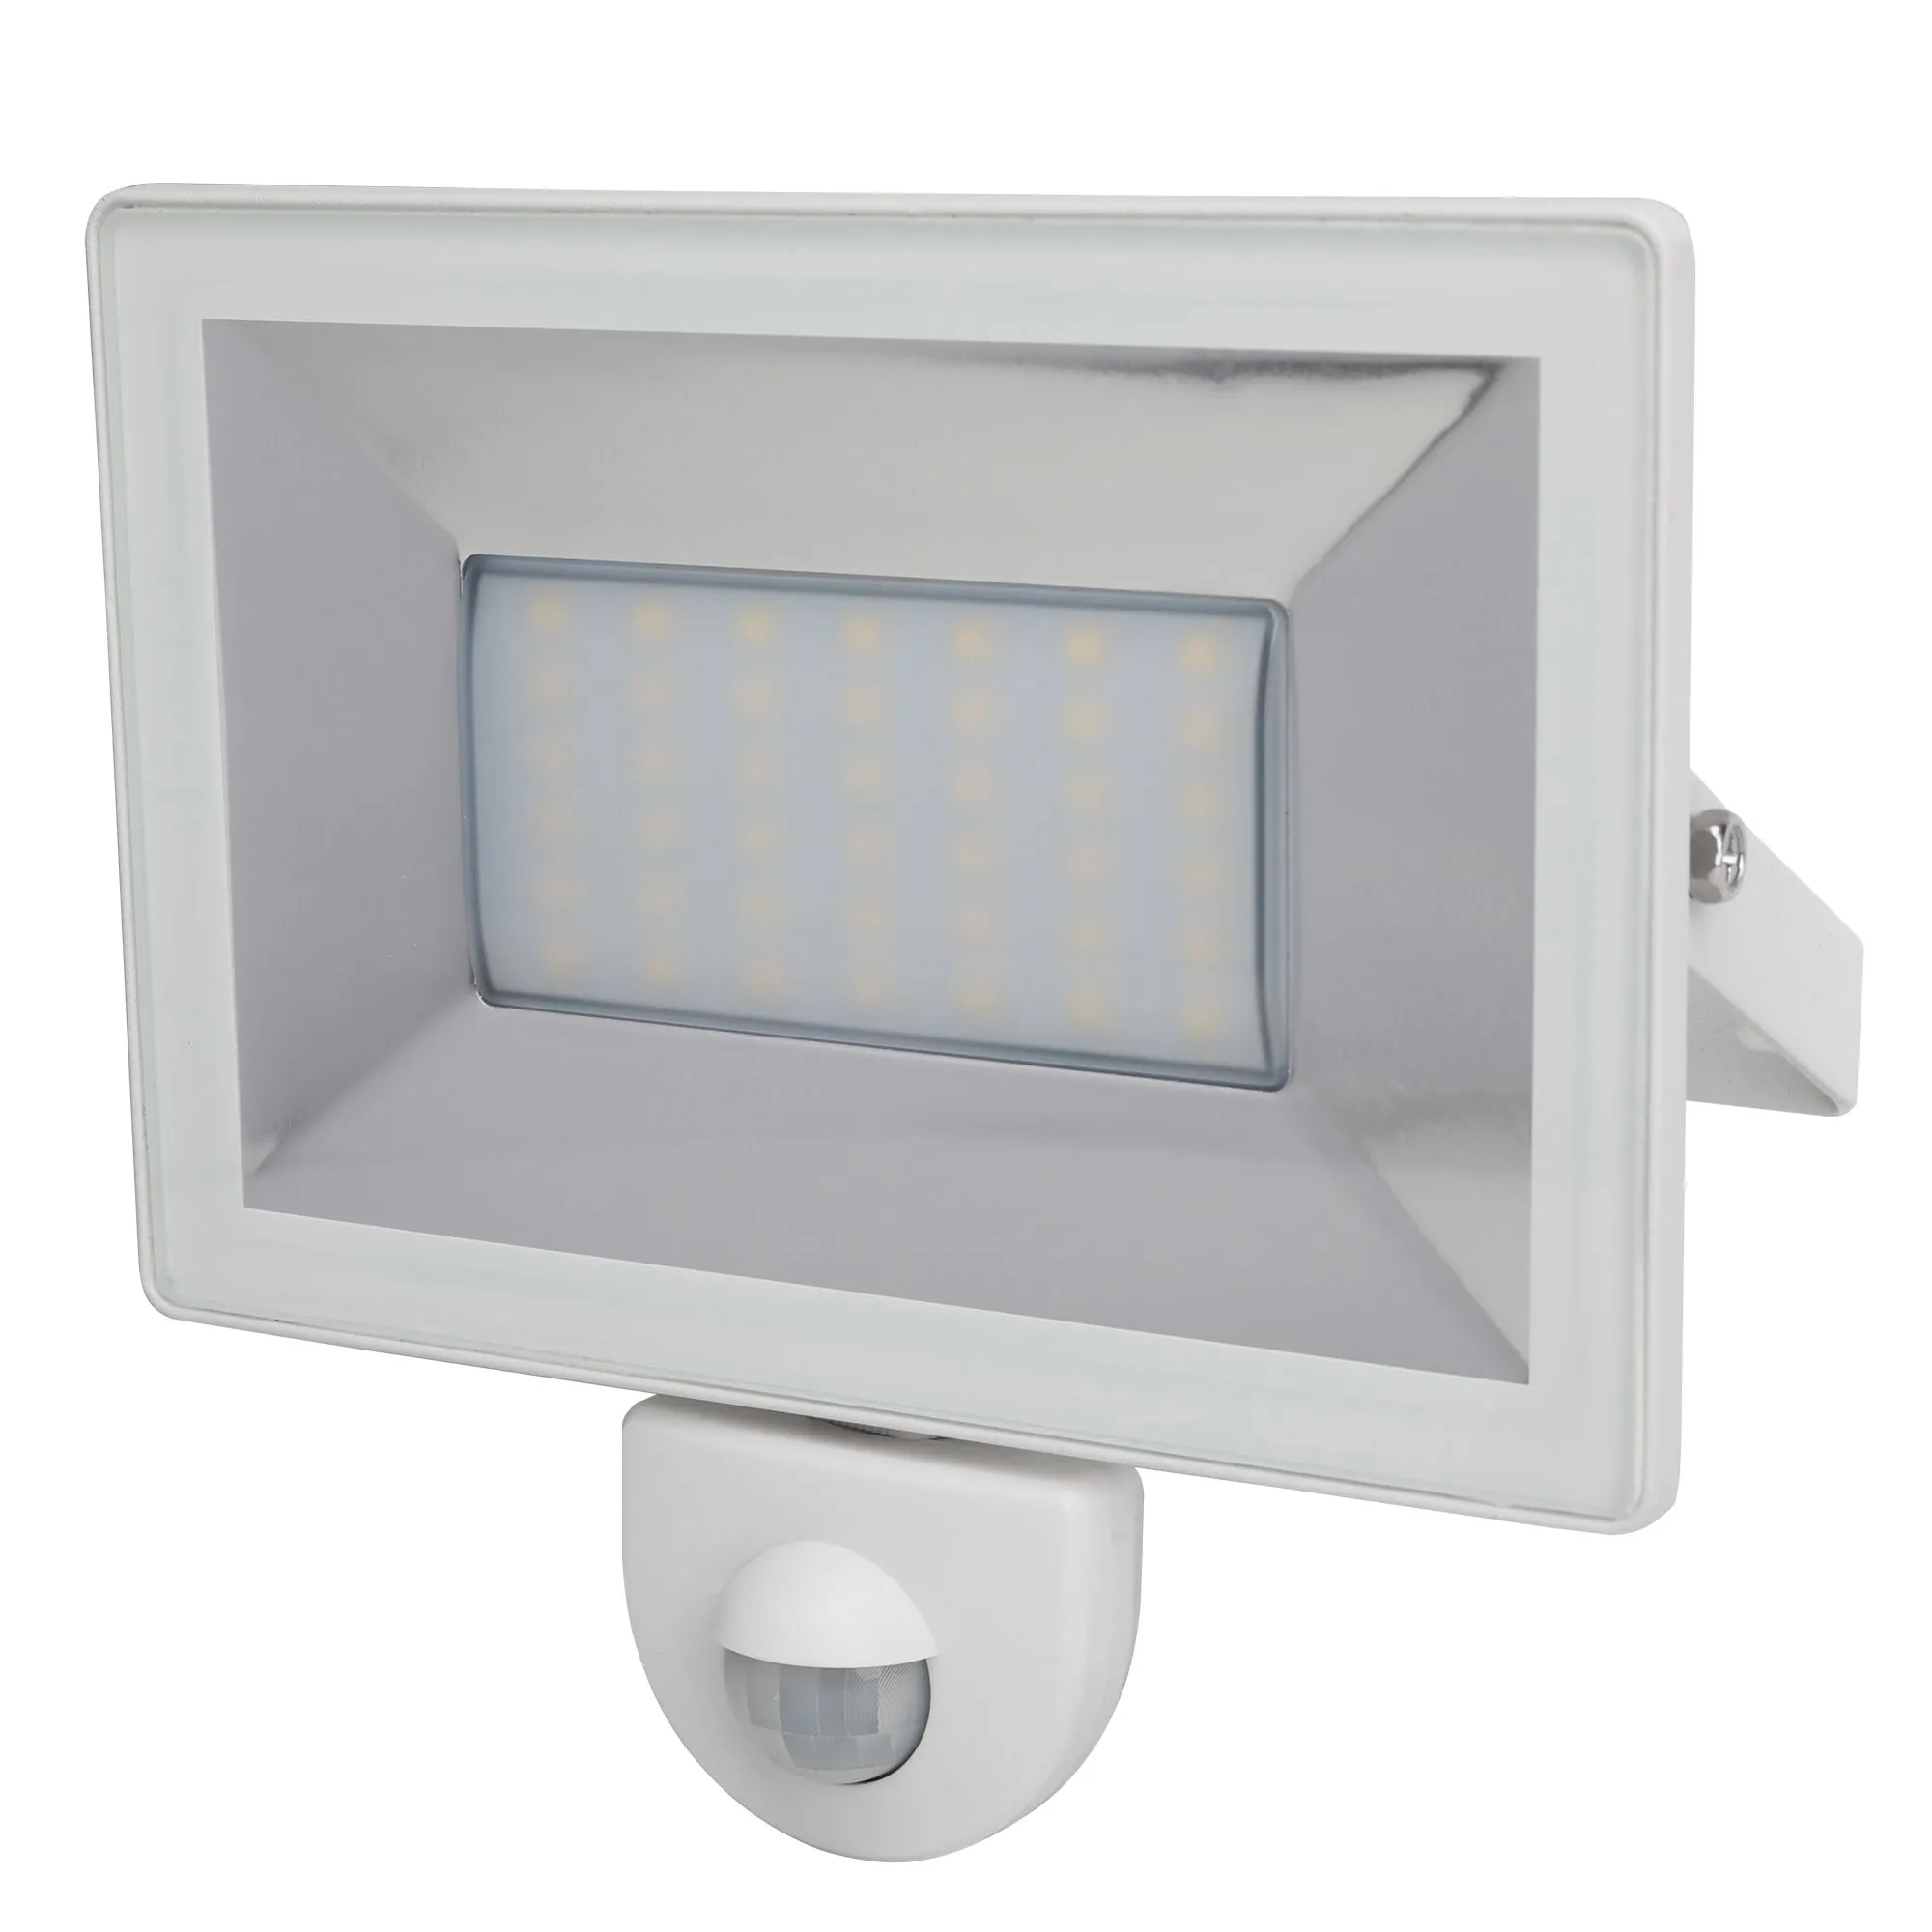 Blooma Weyburn White Mains-powered Cool white LED PIR Motion sensor Floodlight 2400lm